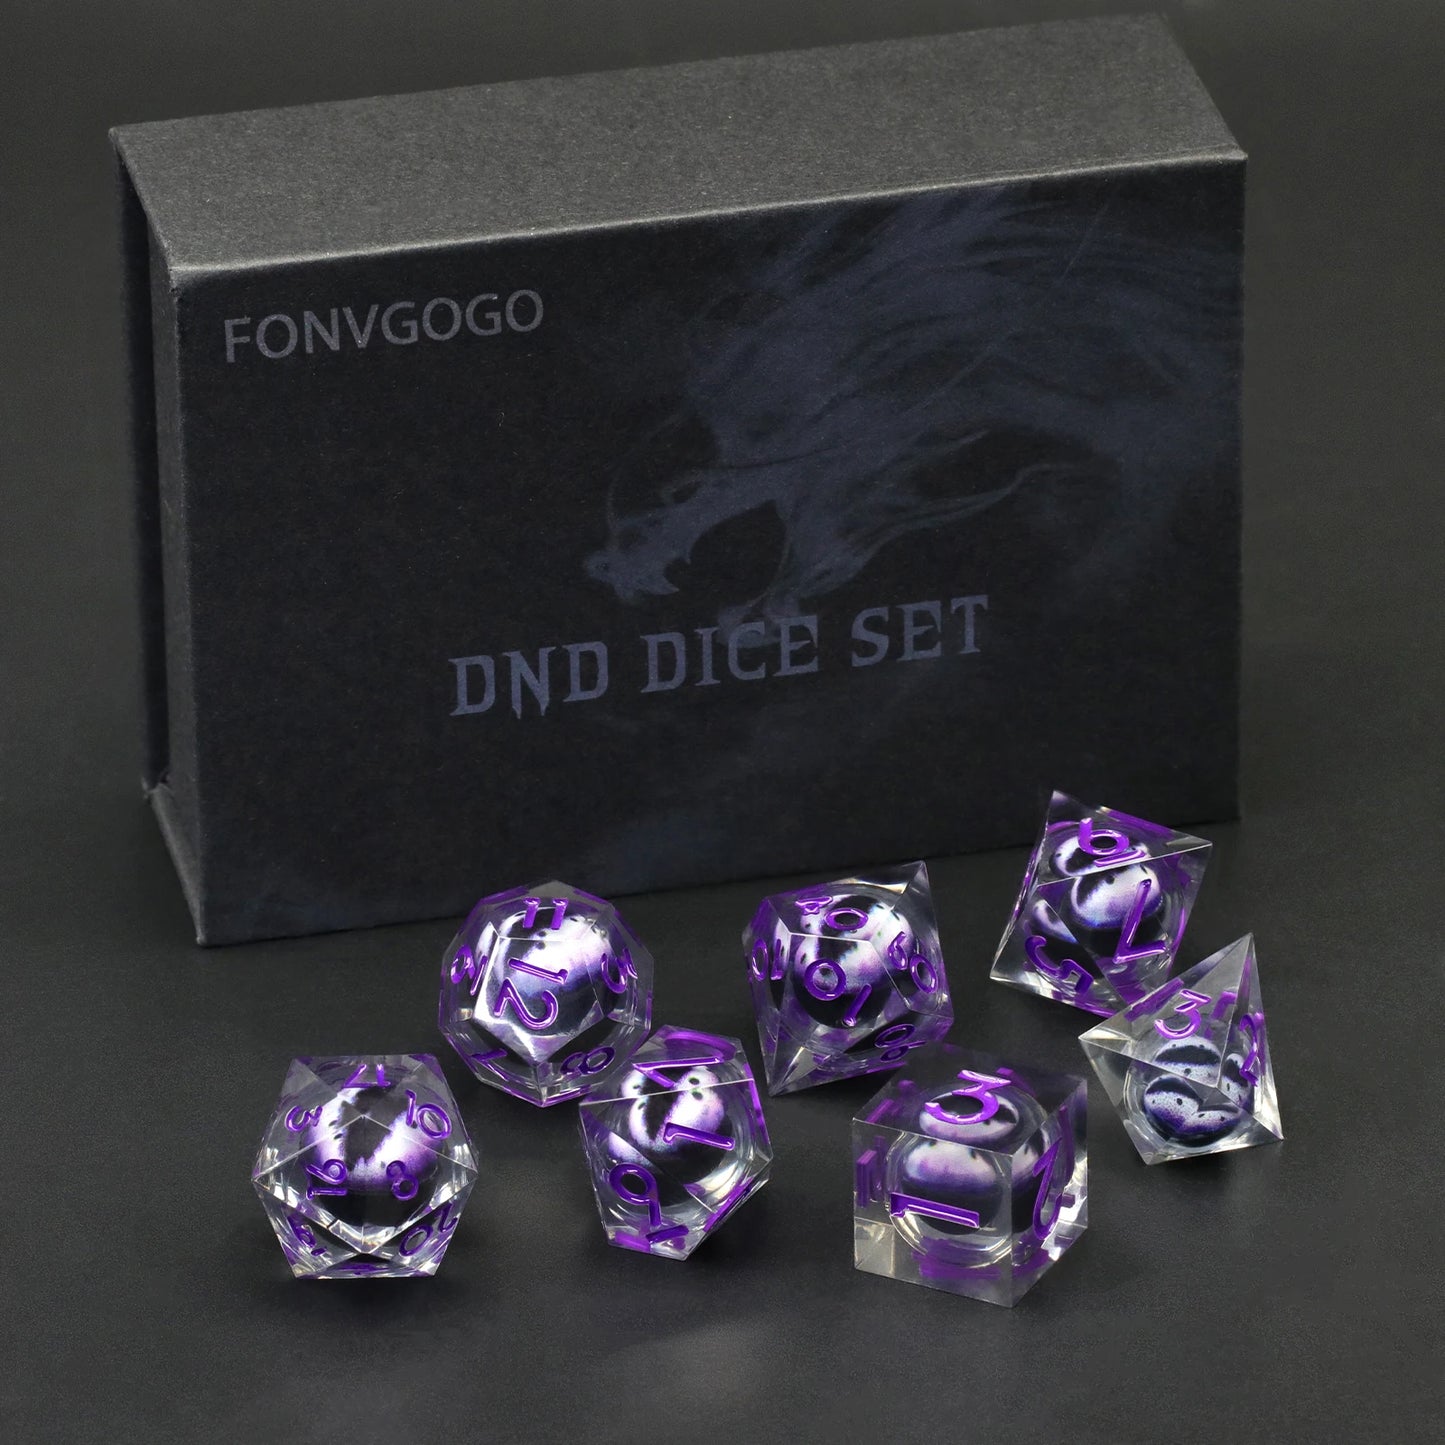 Sharp Edge Resin Dice Set, Liquid Core DND Dice, Dragon Eye Dice Set Polyhedral D&D Dice For TTrpg Table Game Deep Purple